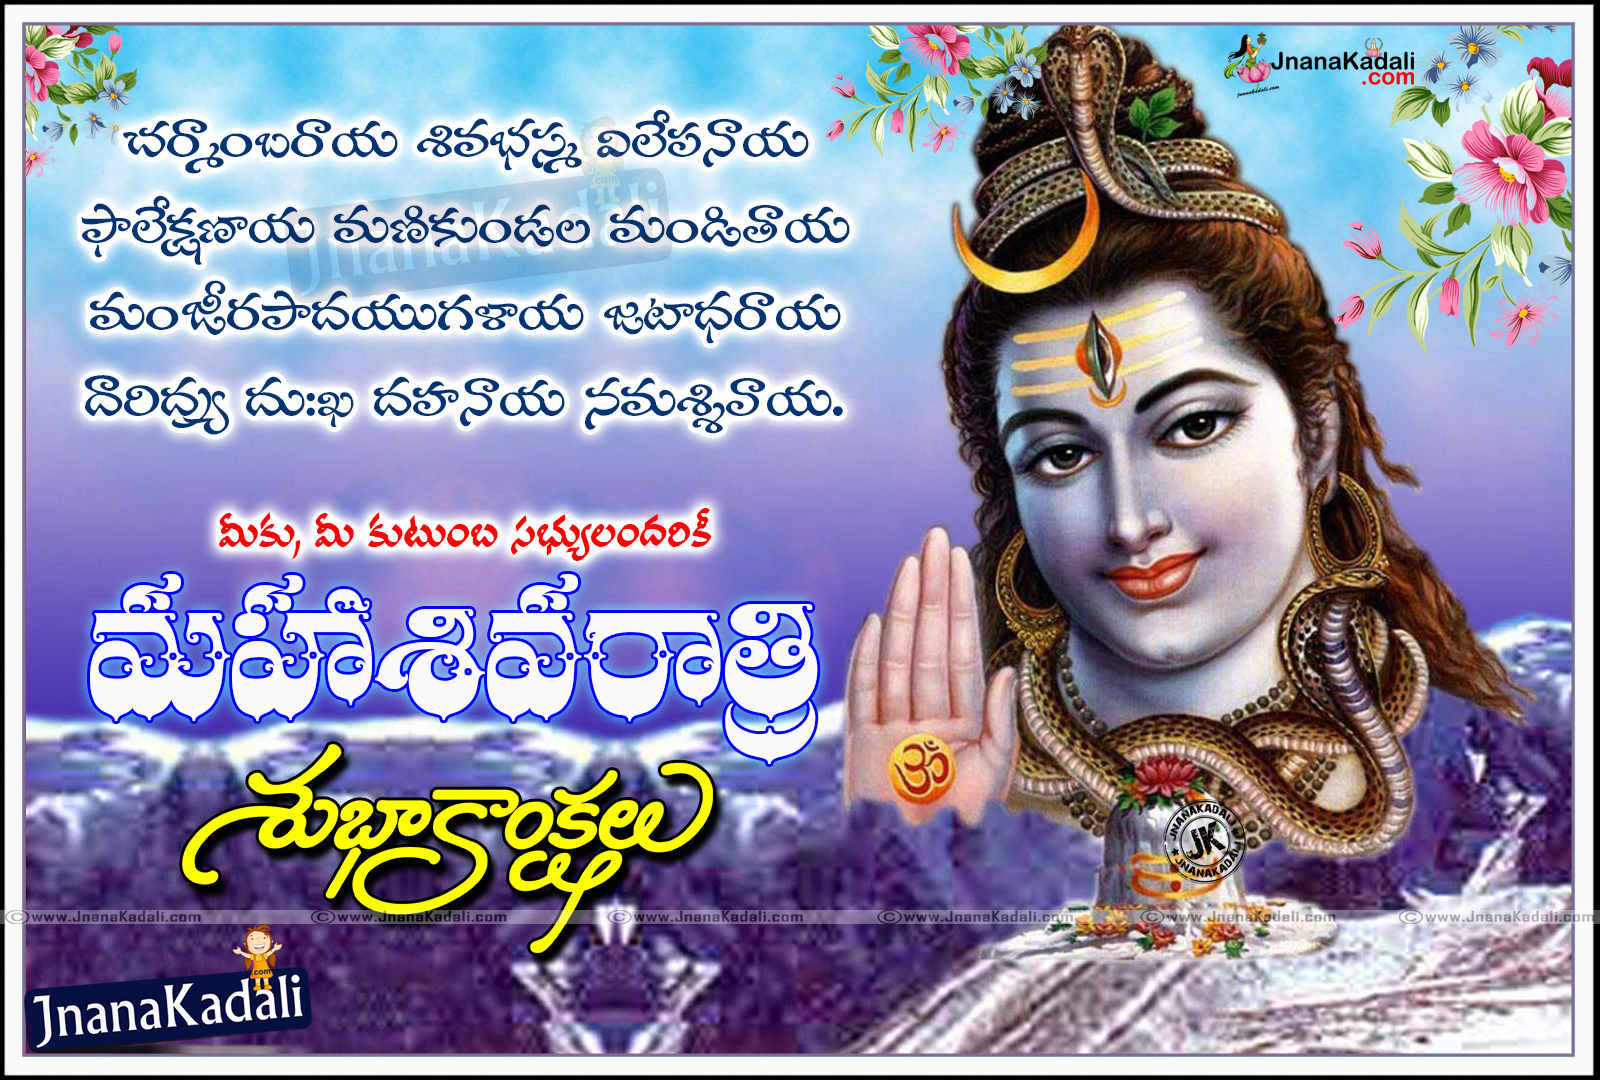 New Telugu Language Lord Shiva Hd Wallpapers with Happy Maha ...